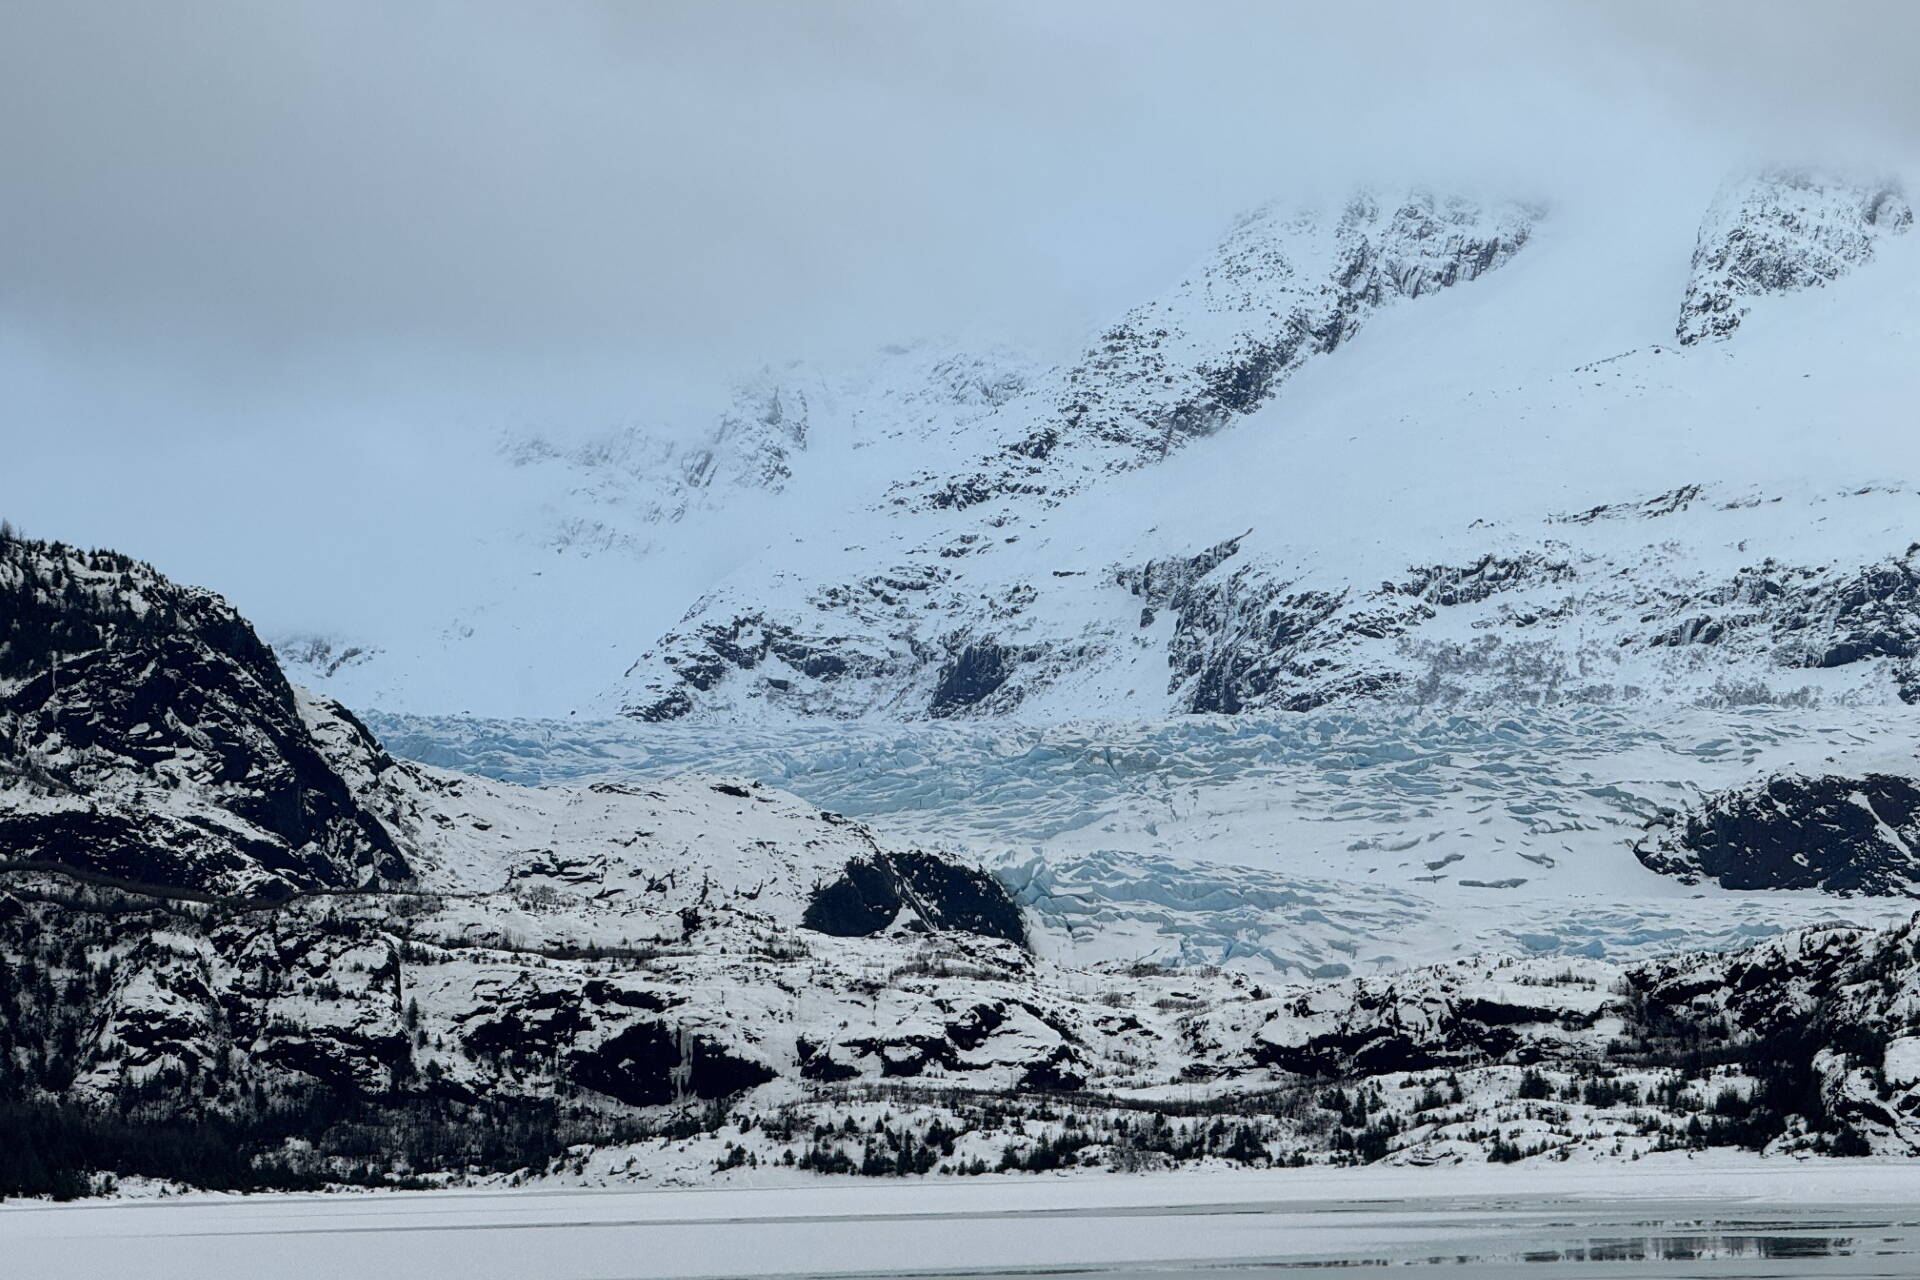 Mendenhall Glacier and Mendenhall Lake on Jan. 28. (Photo by Deana Barajas)